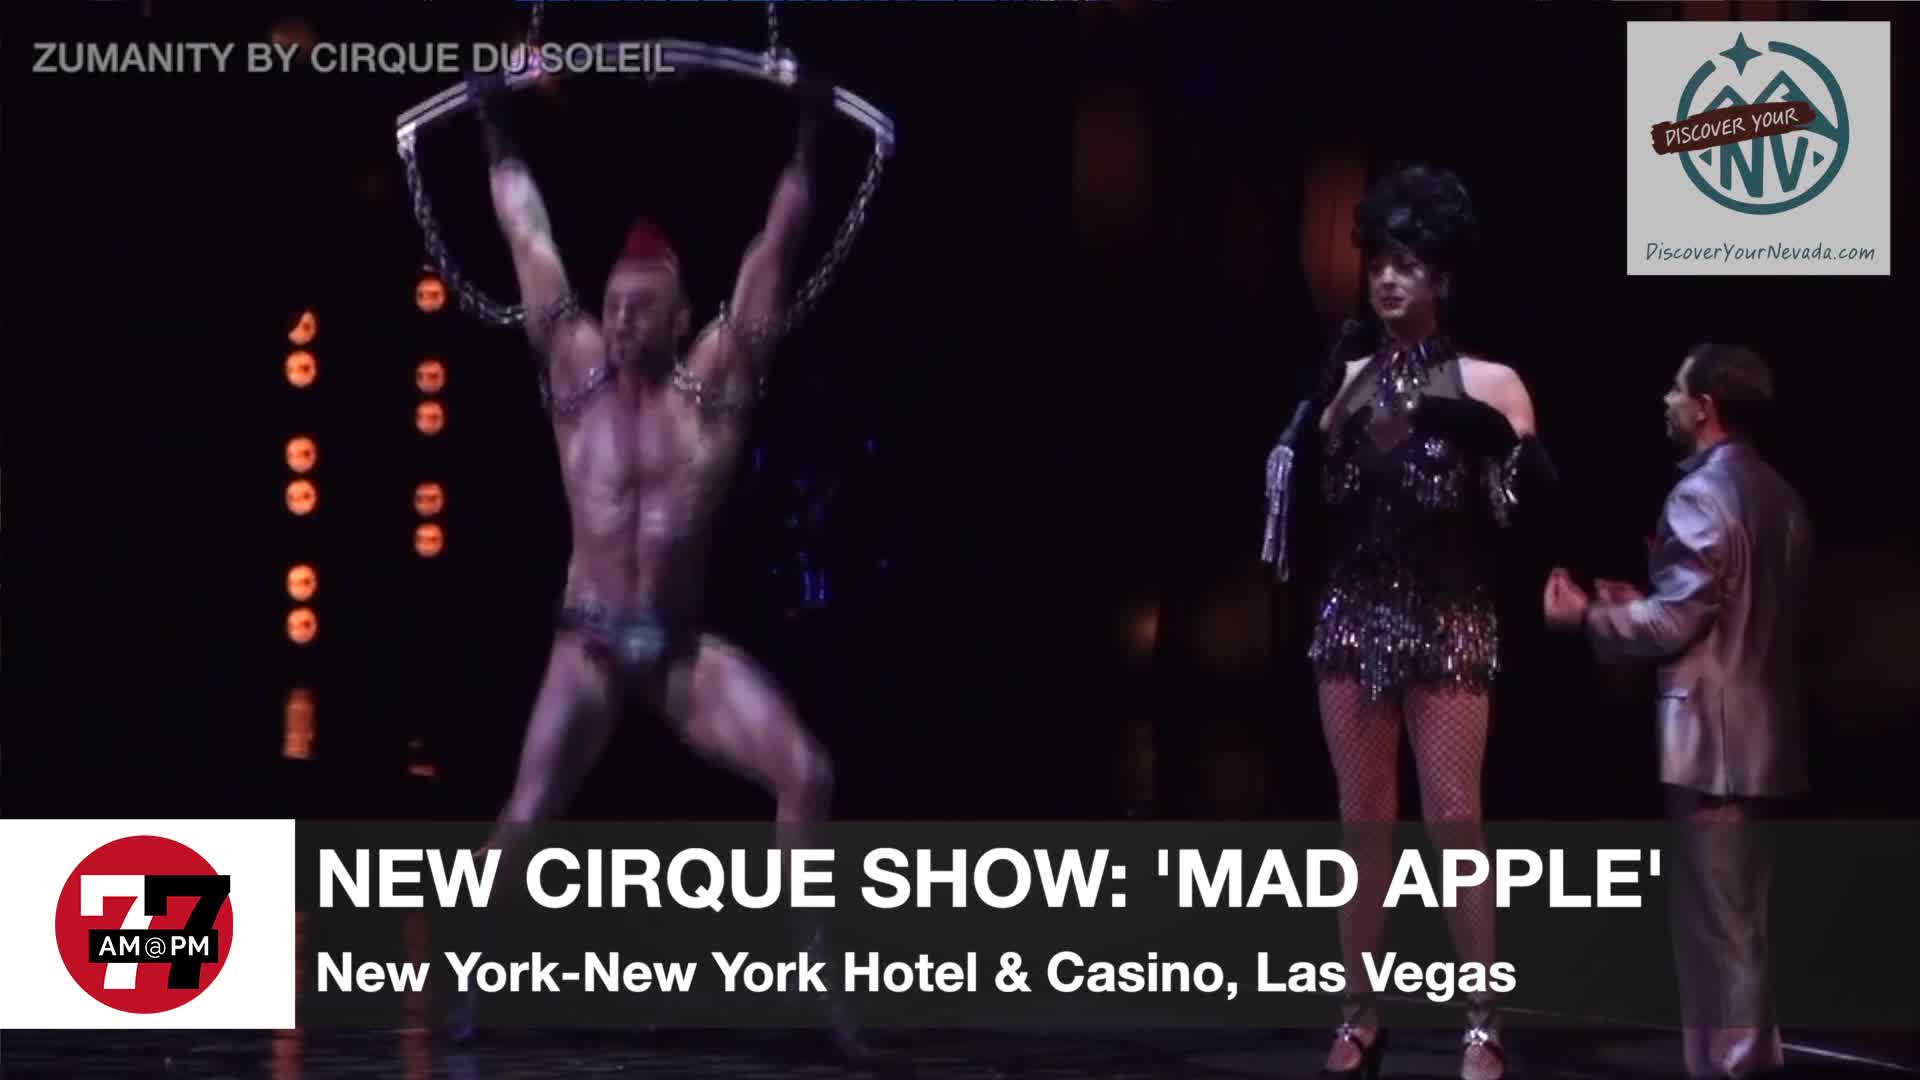 New Cirque show: Mad Apple